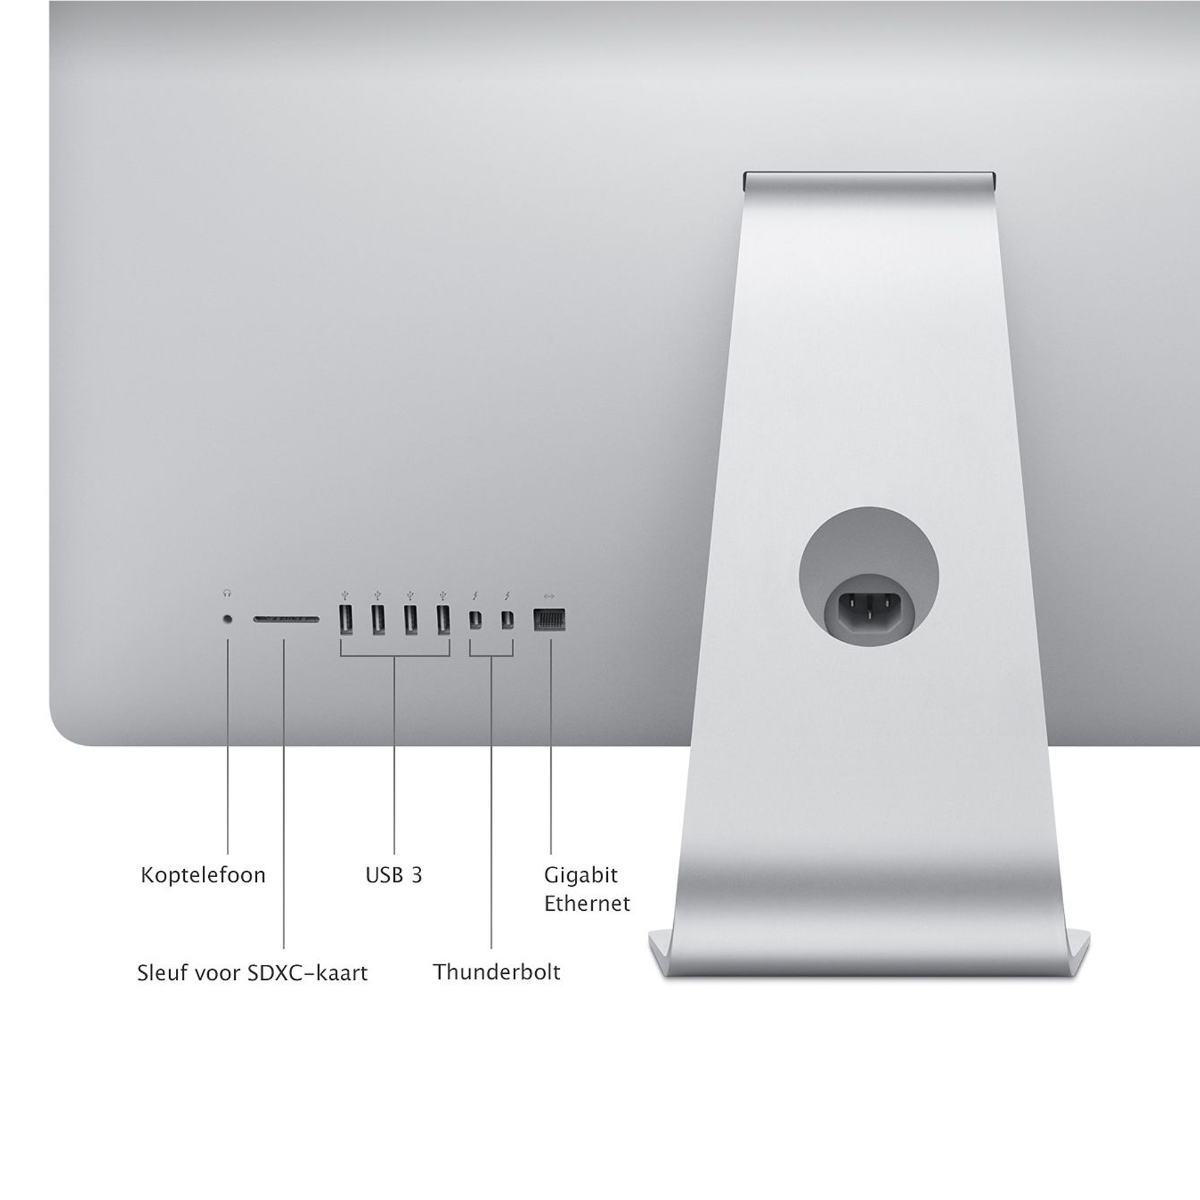 Refurbished iMac 27-inch (5K) i5 3.4 32GB 256GB SSD